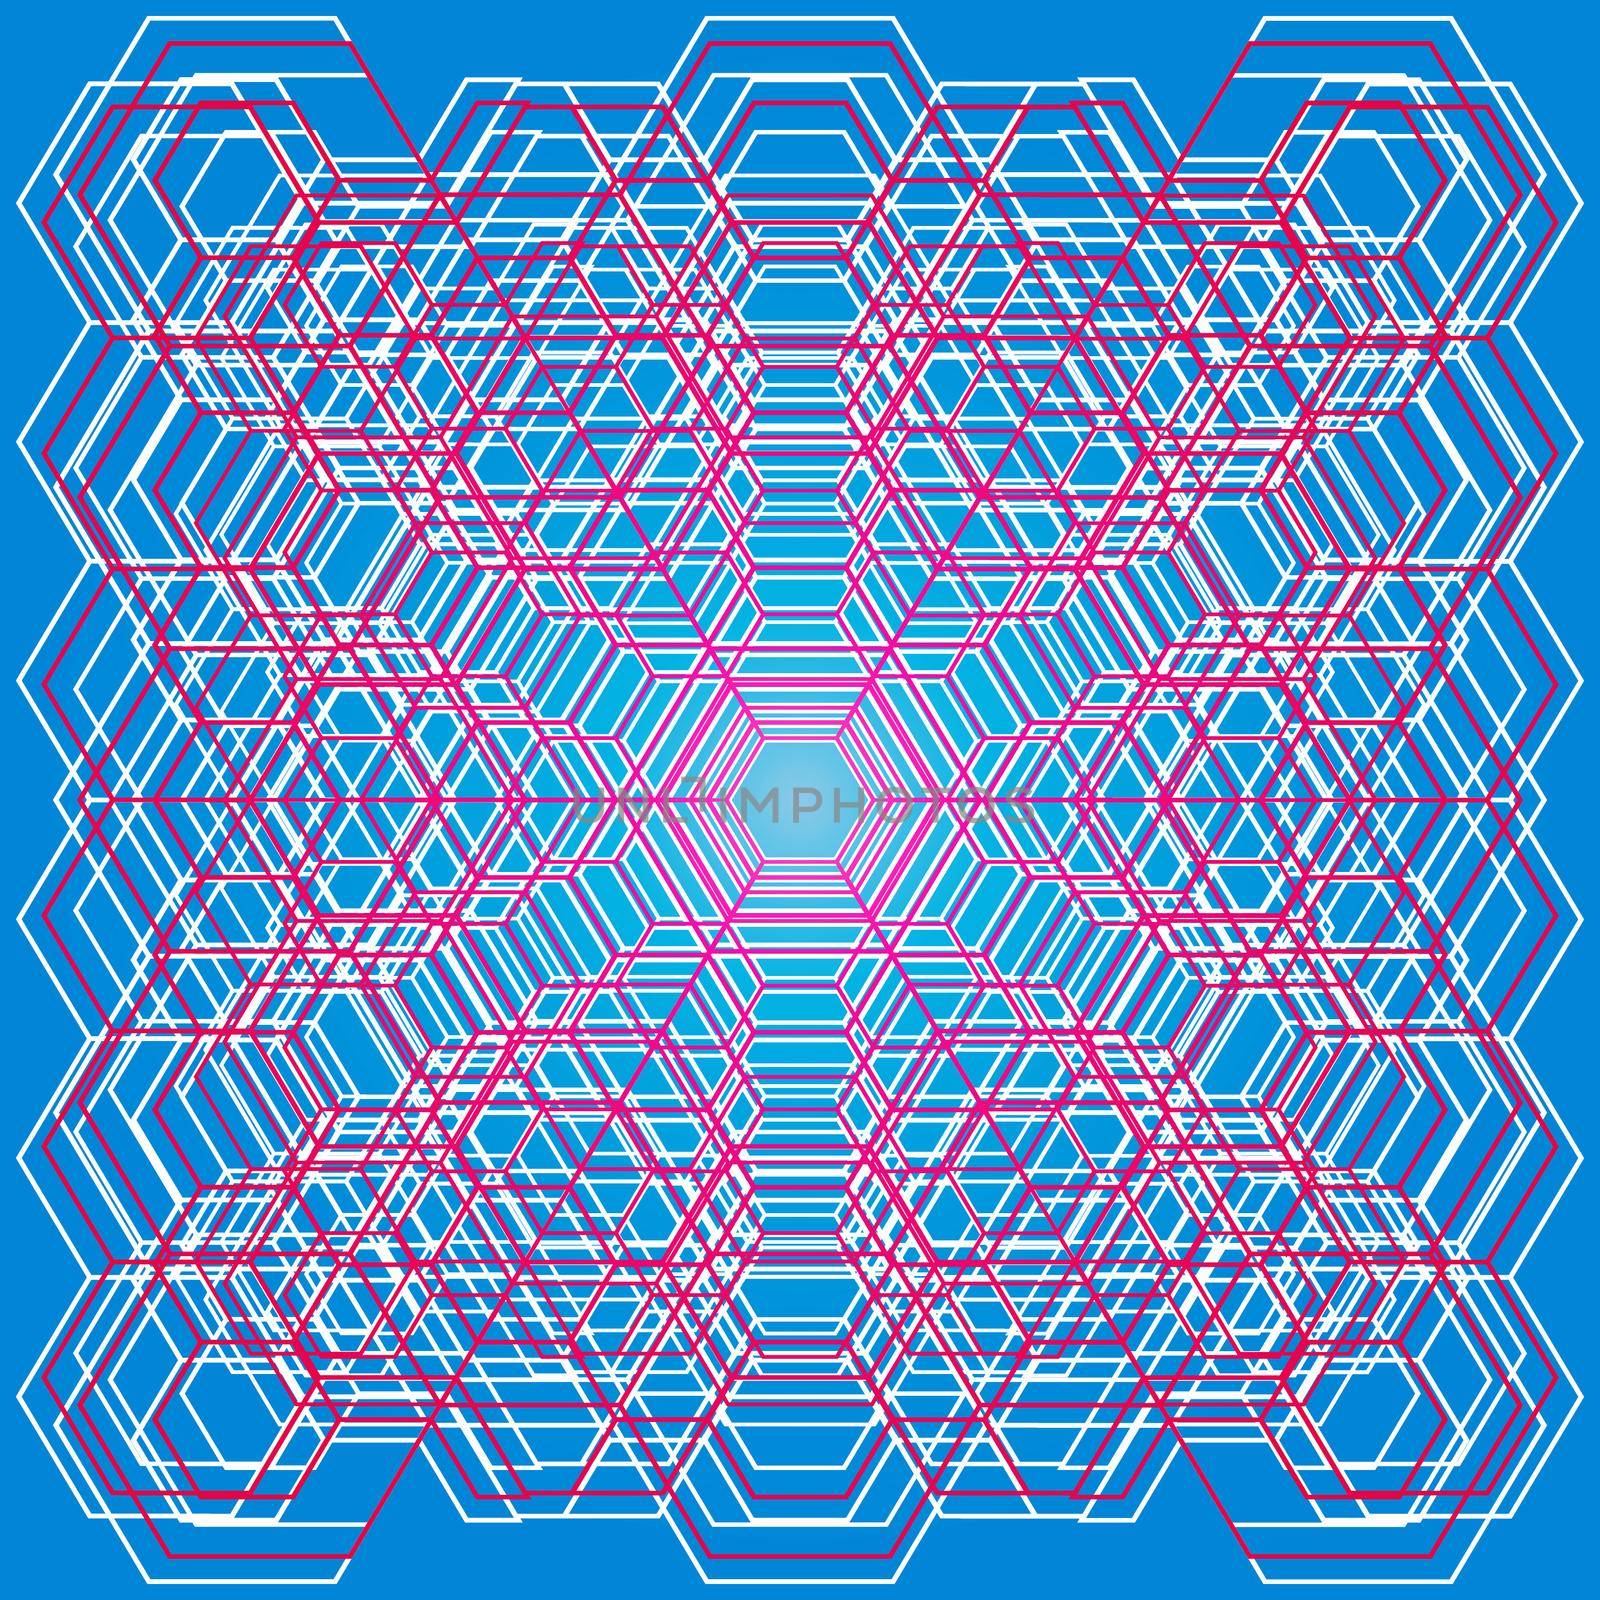 Polygonal3 by Bobnevv